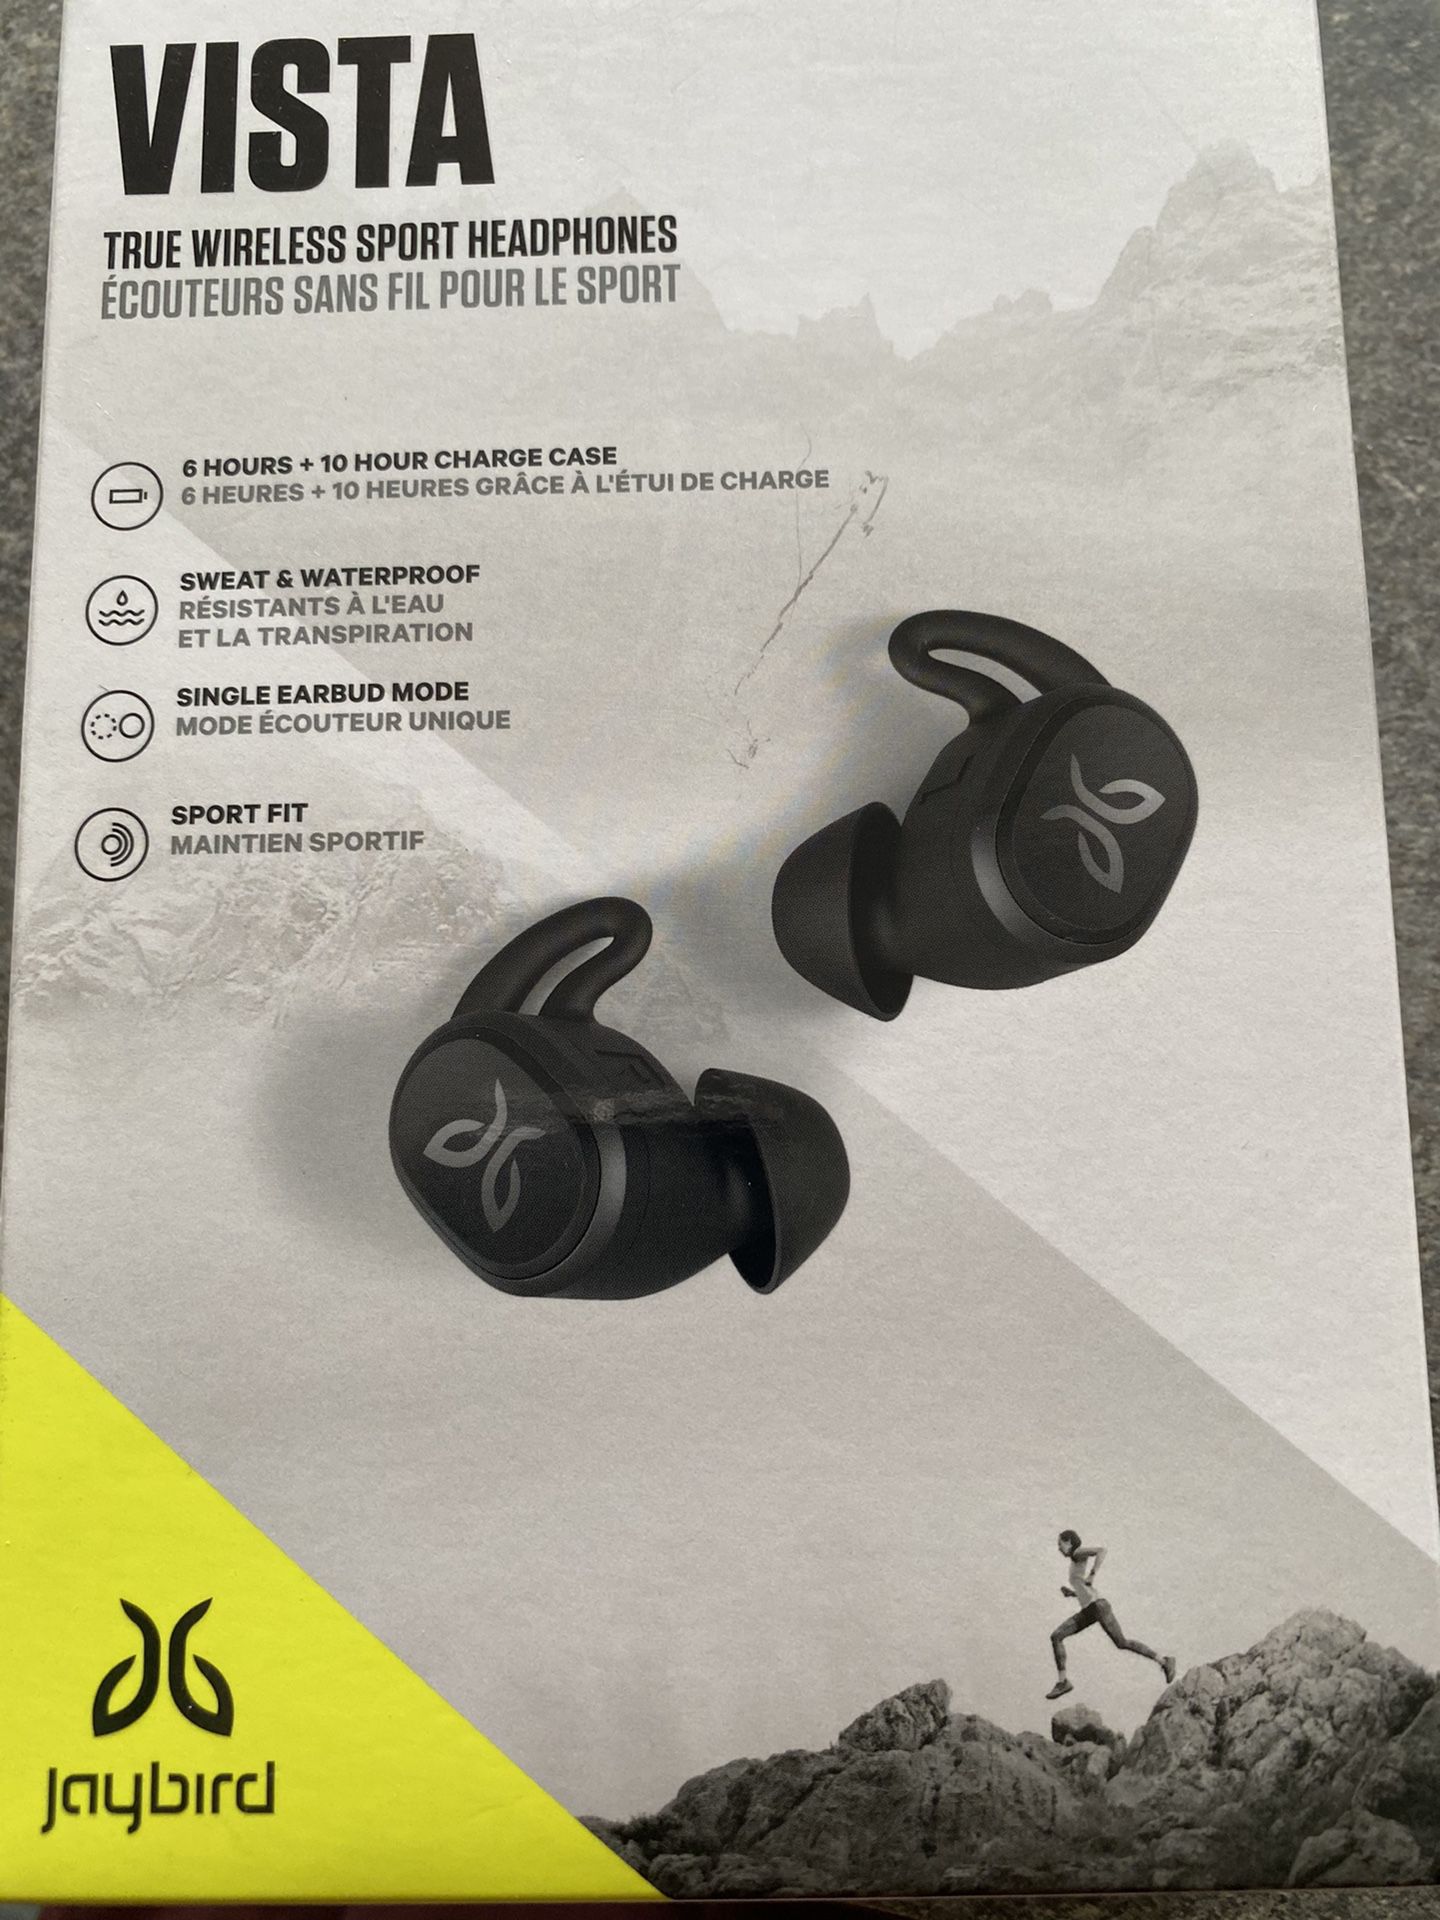 Jay bird wireless sport headphones